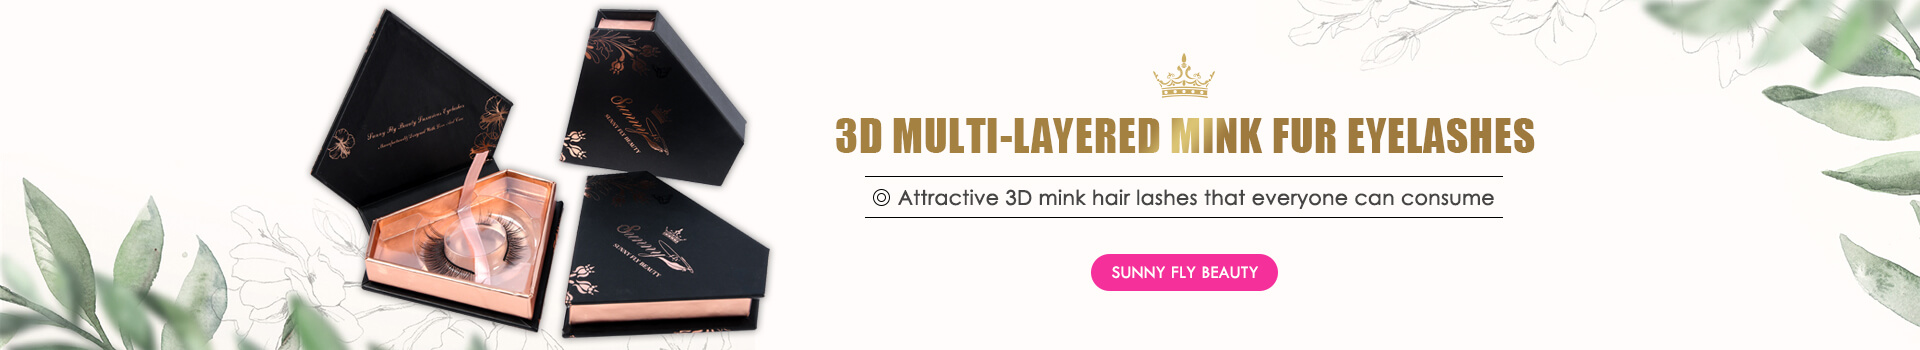 3D Multi-layered Mink Fur Eyelashes MG01